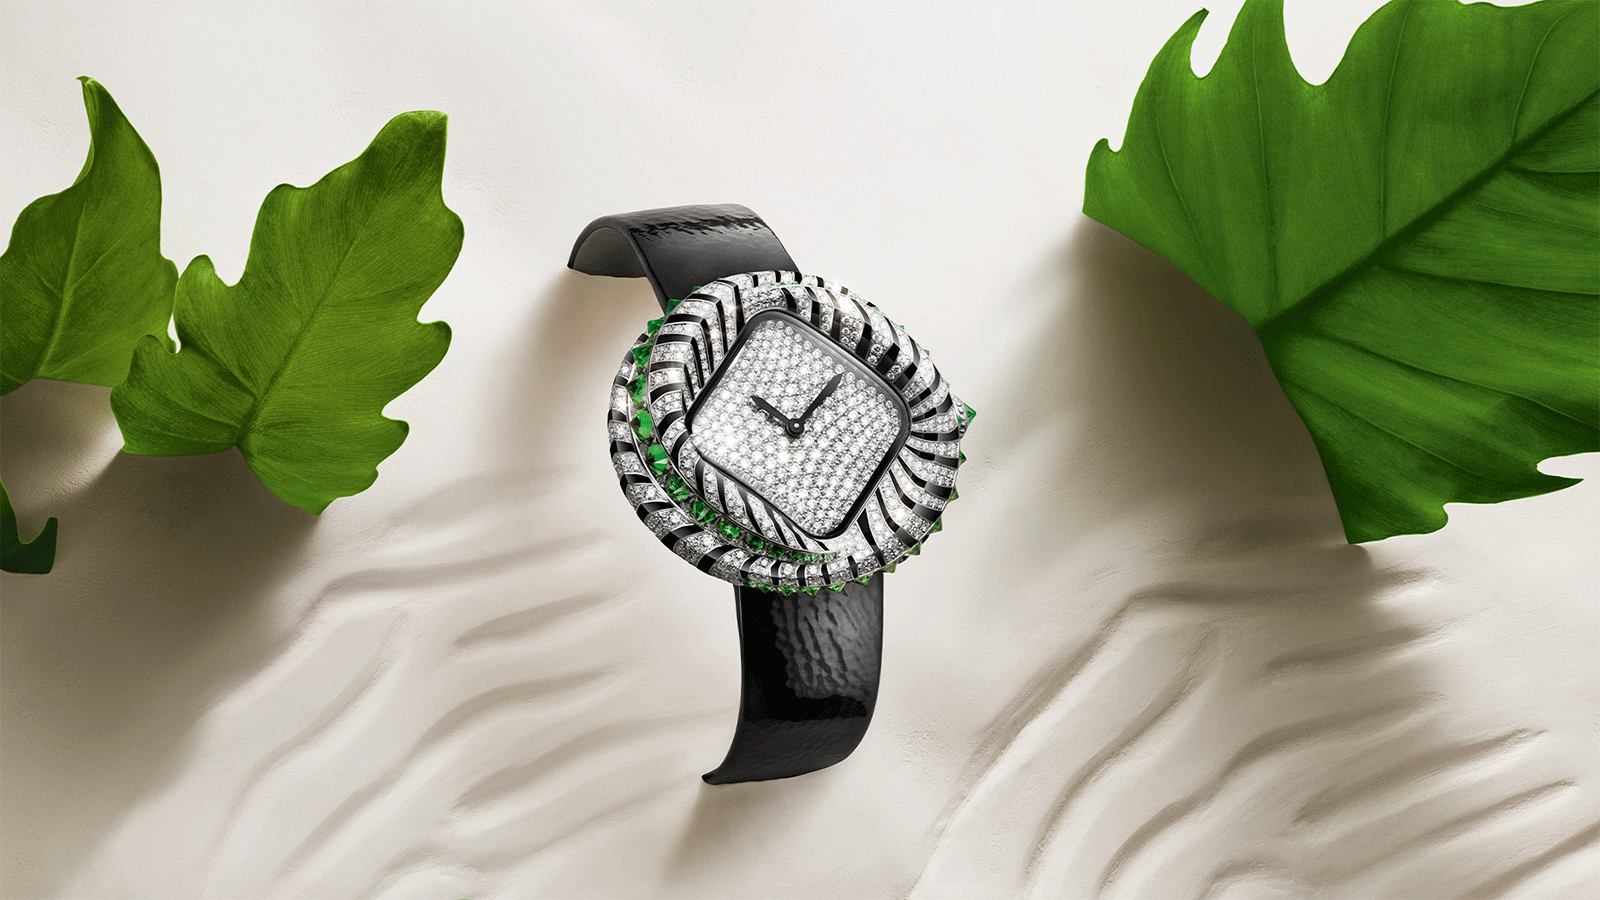 Cartier Animal Jewellery Watch - Zebra and Crocodile